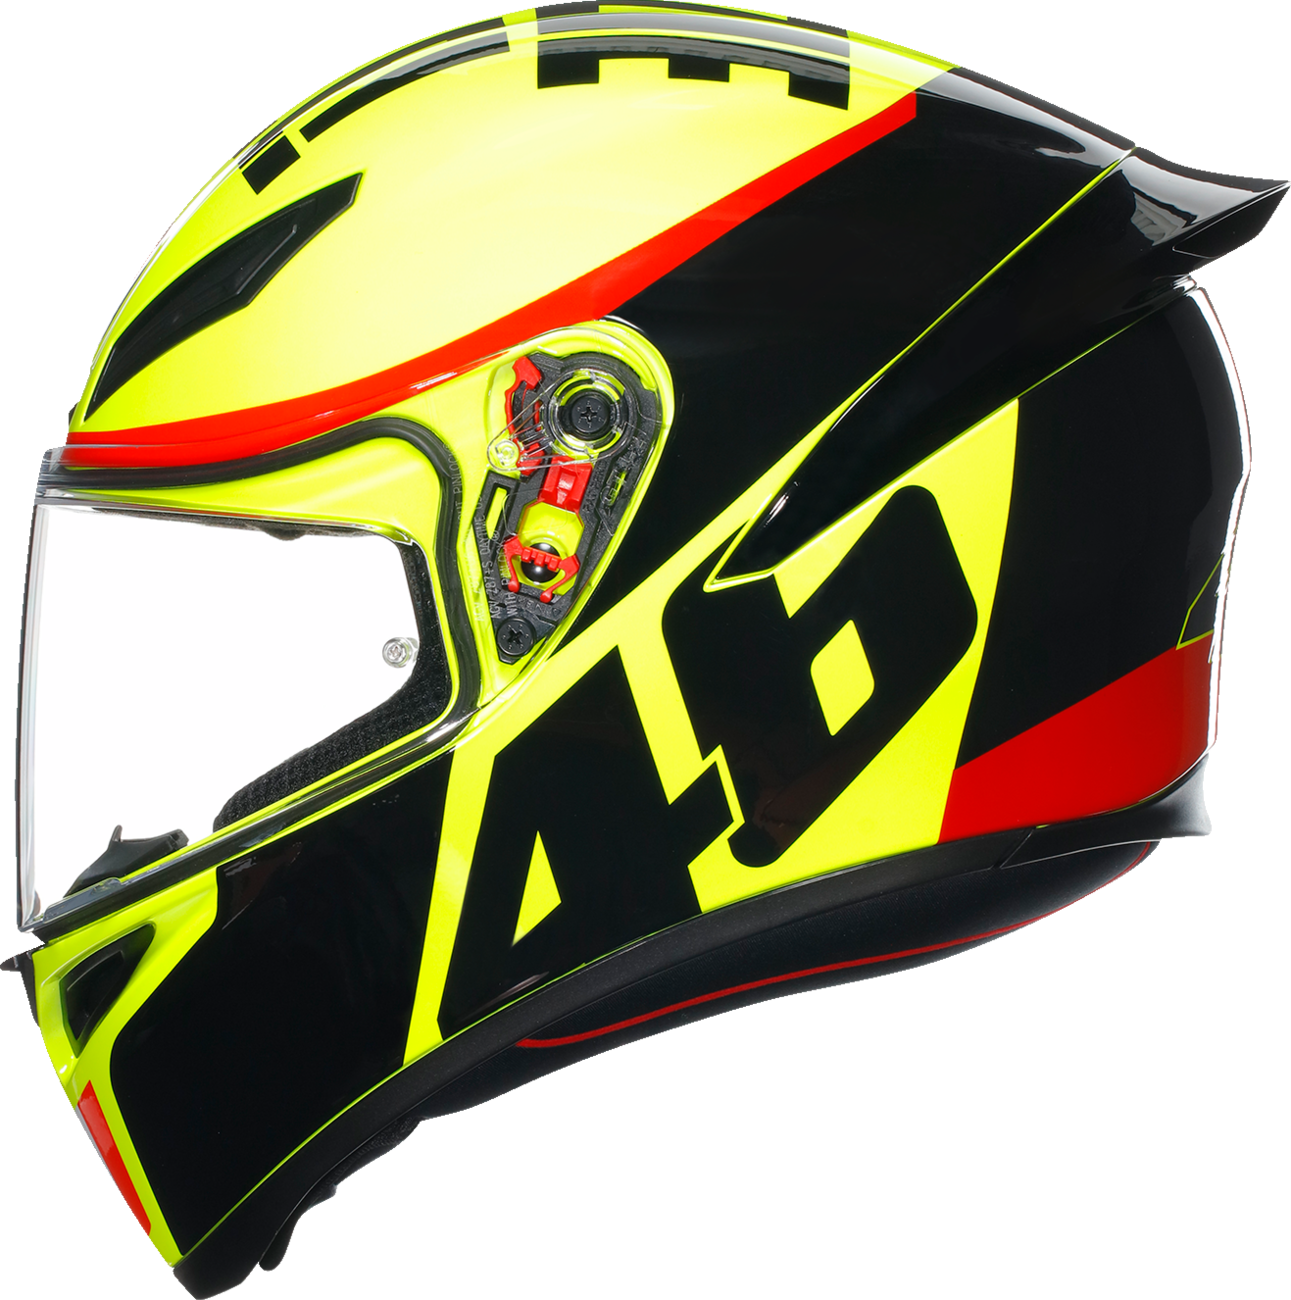 AGV K1 S Helmet - Grazie Vale - Medium 2118394003018M